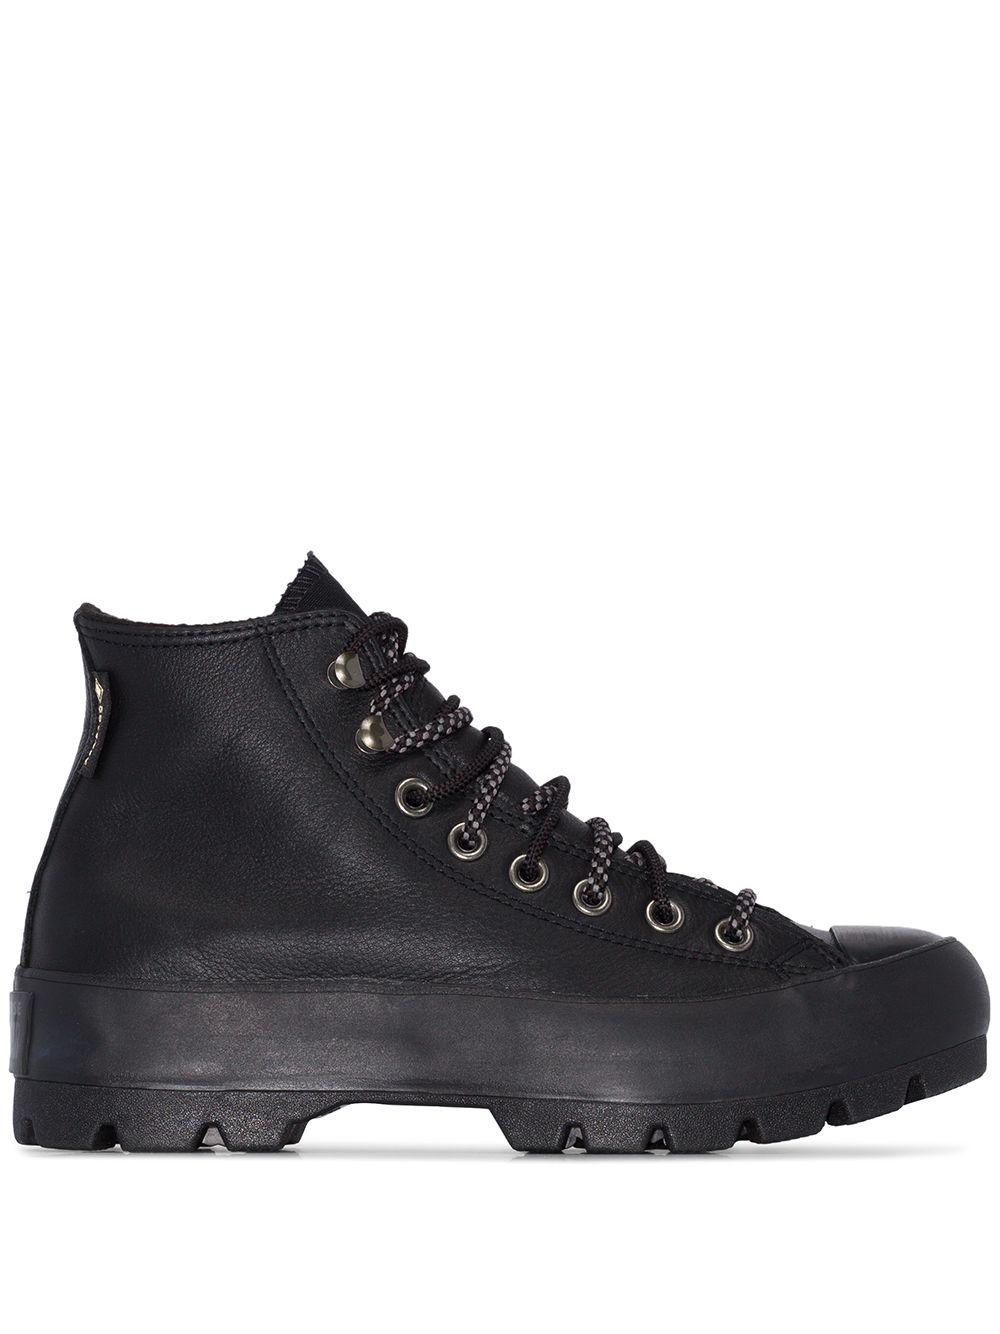 Converse Black Chuck Taylor Gore-tex Winter Boots | Lyst